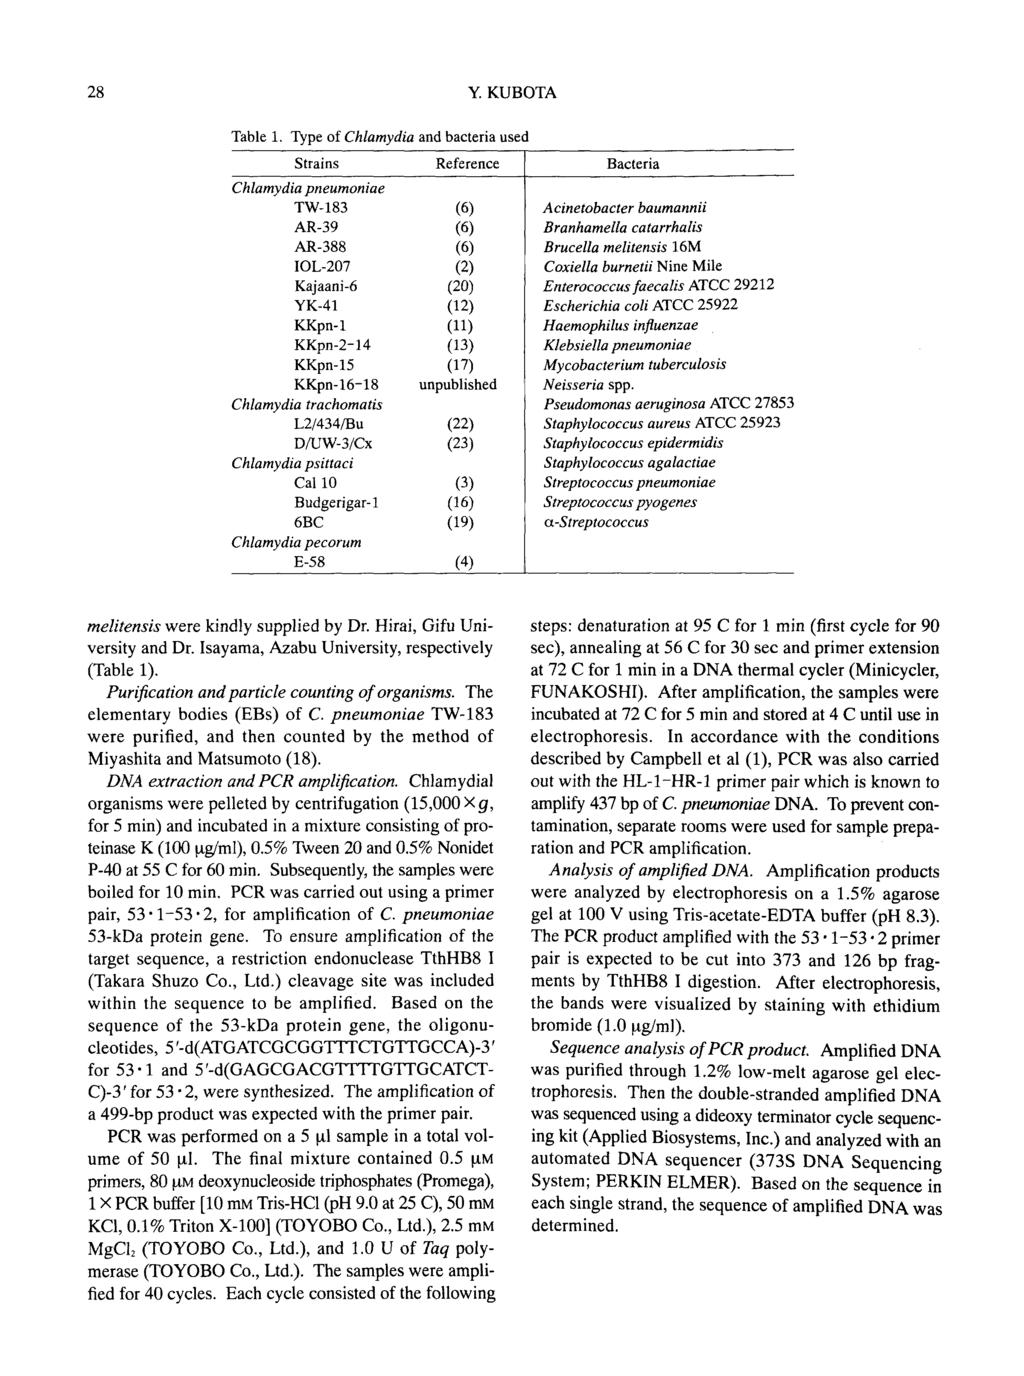 28 Y. KUBOTA Table 1. Type of Chiamydia and bacteria used melitensis were kindly supplied by Dr. Hirai, Gifu University and Dr. Isayama, Azabu University, respectively (Table 1).